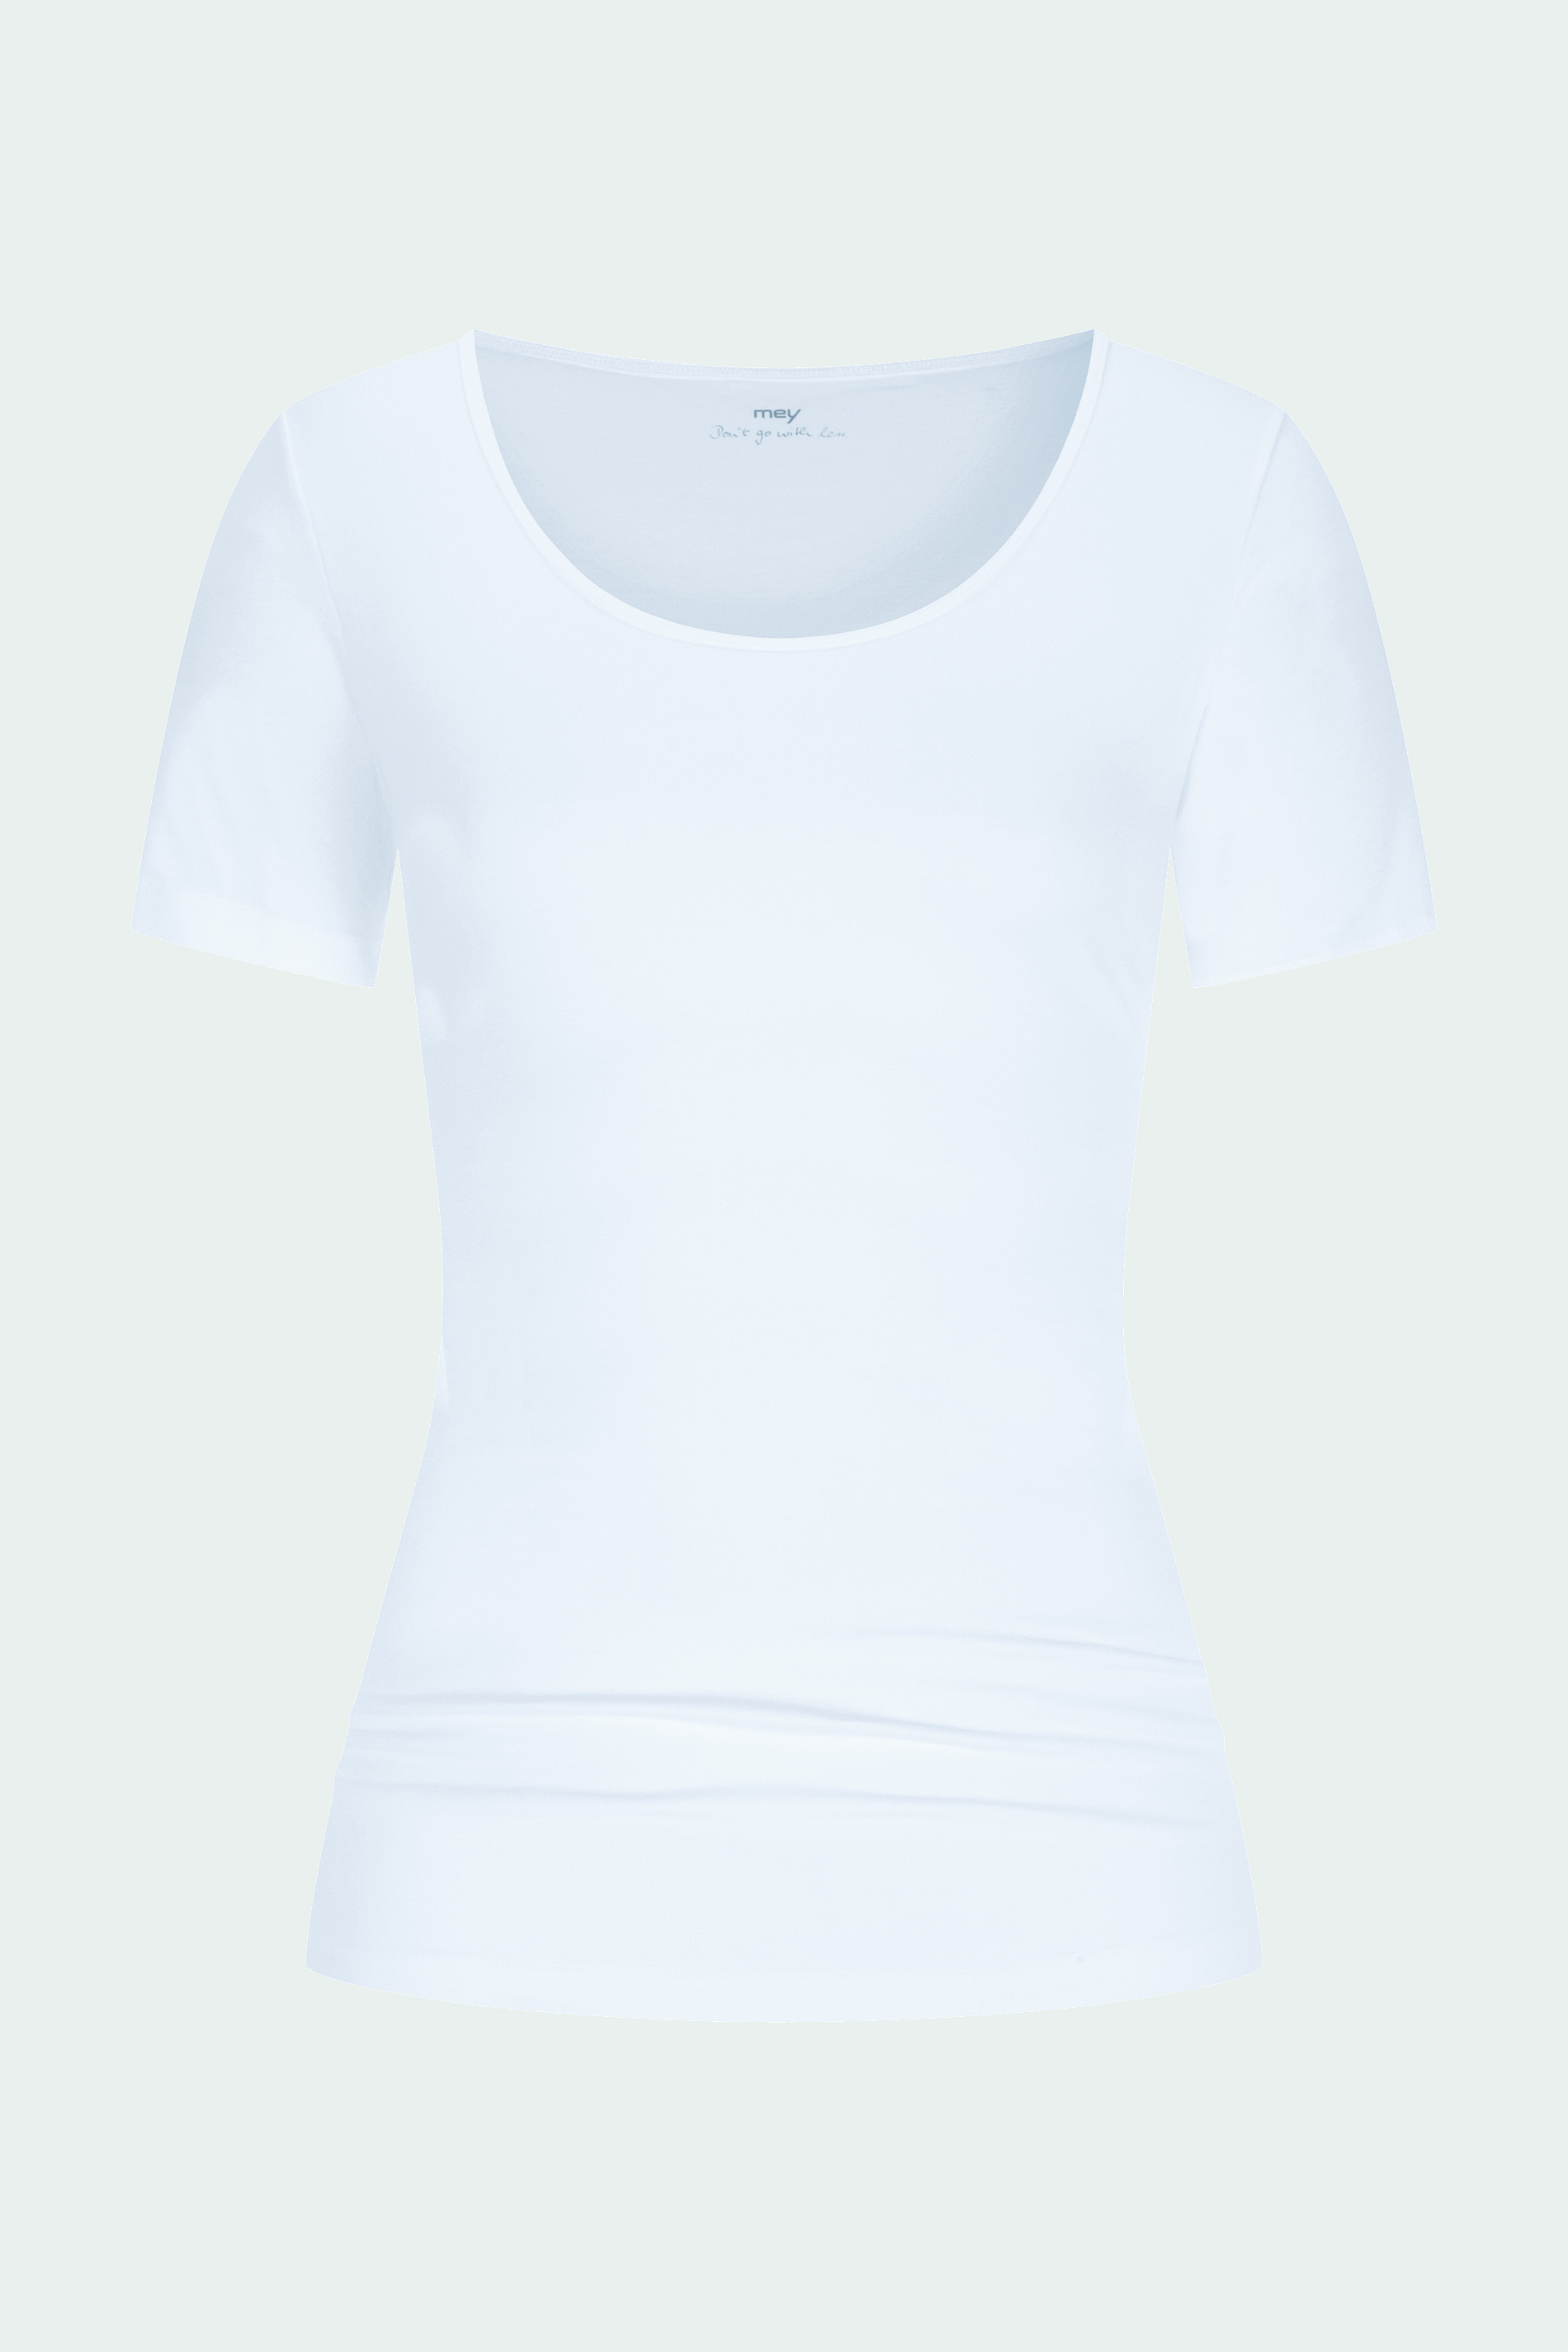 Shirt kurzarm Wit Serie Cotton Pure Uitknippen | mey®